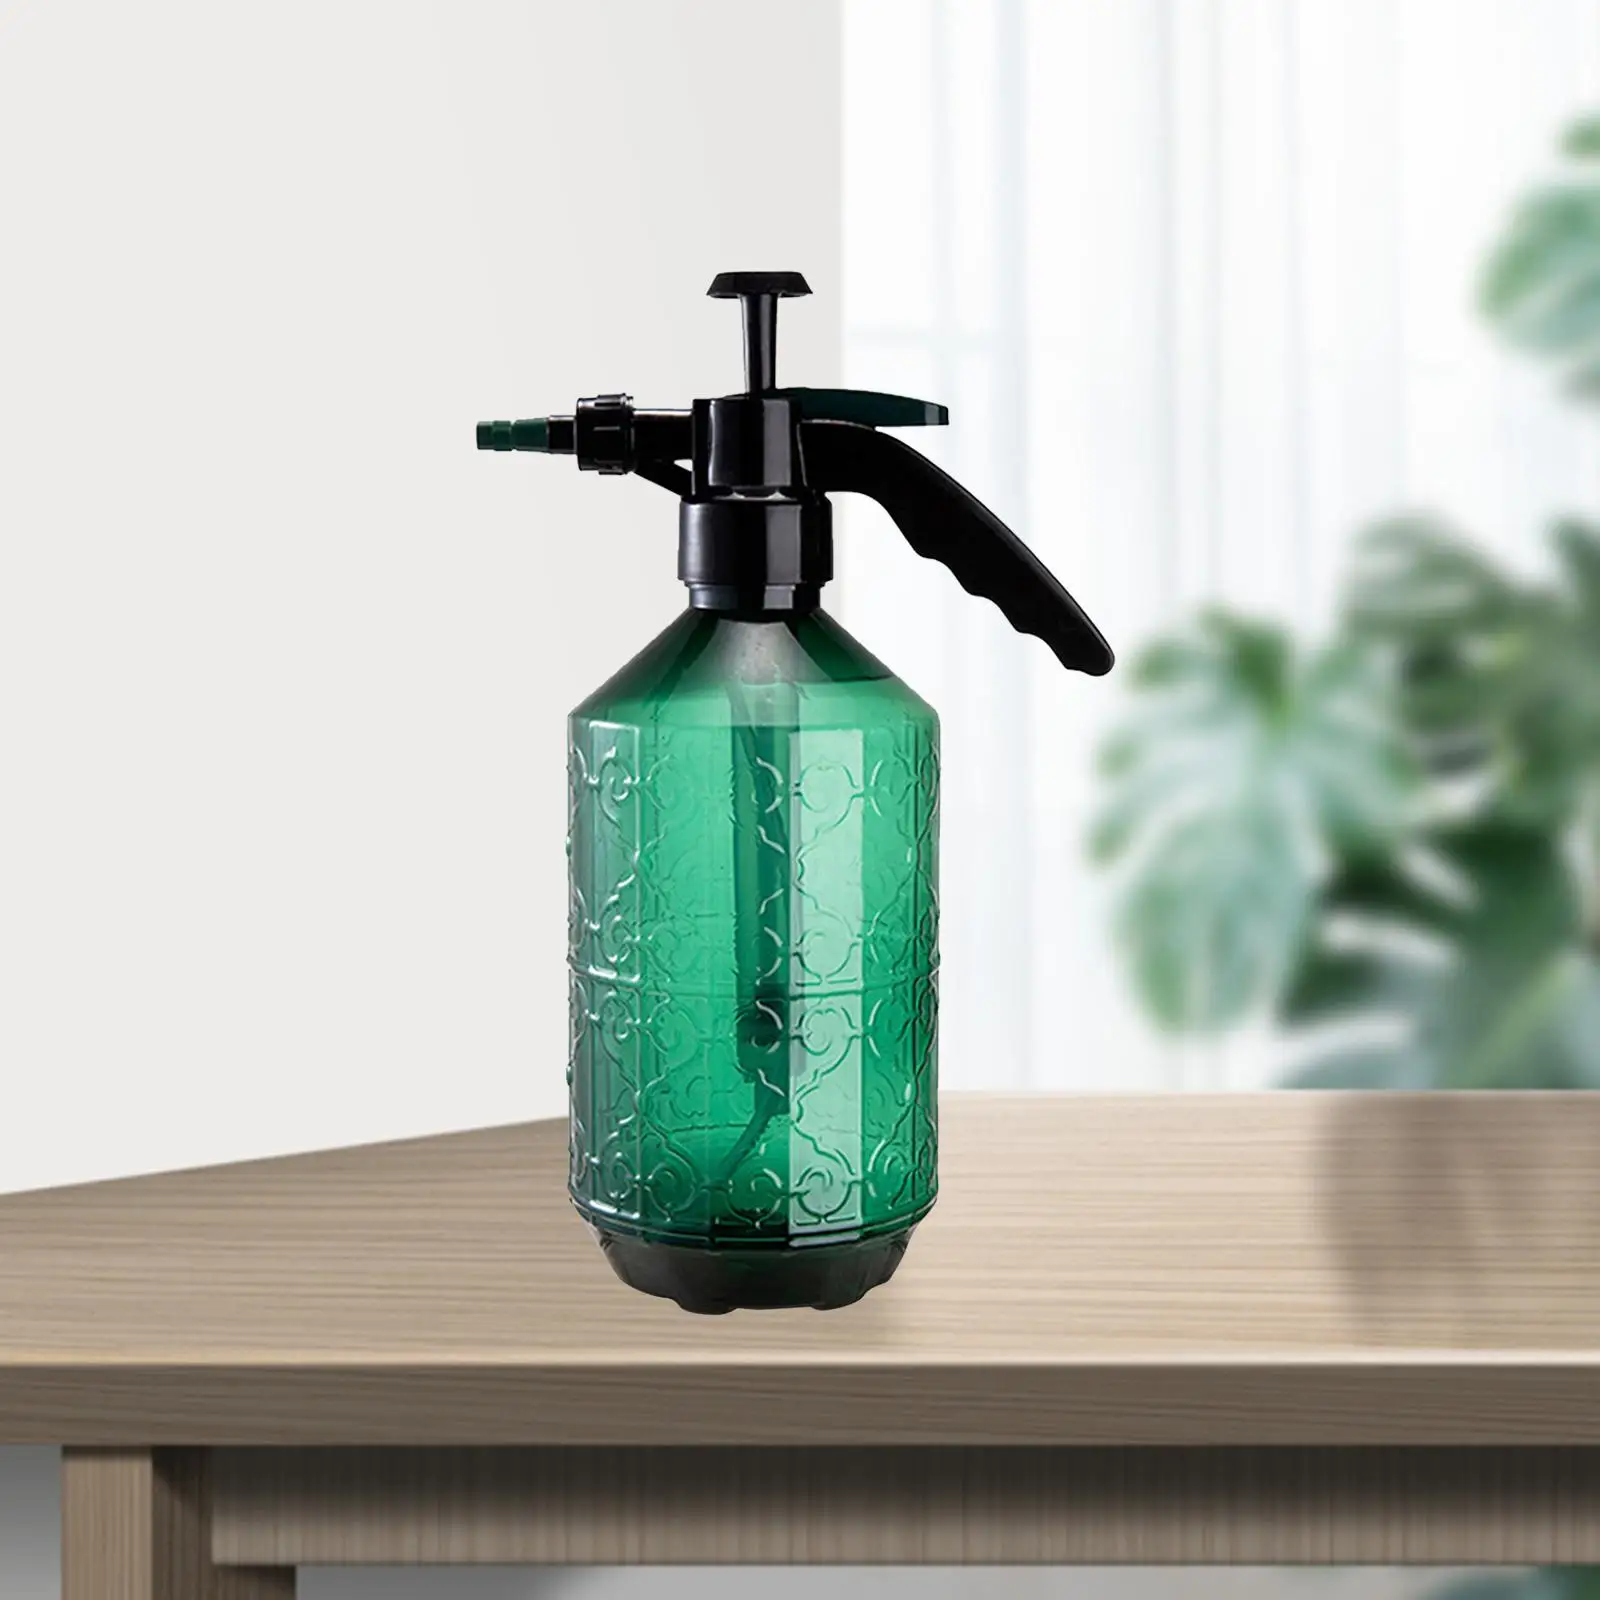 Hand Held Watering Spray Bottle Watering Can Liquid Containers Top Pump Garden Tools Cleaning Work For Home Yard Indoor